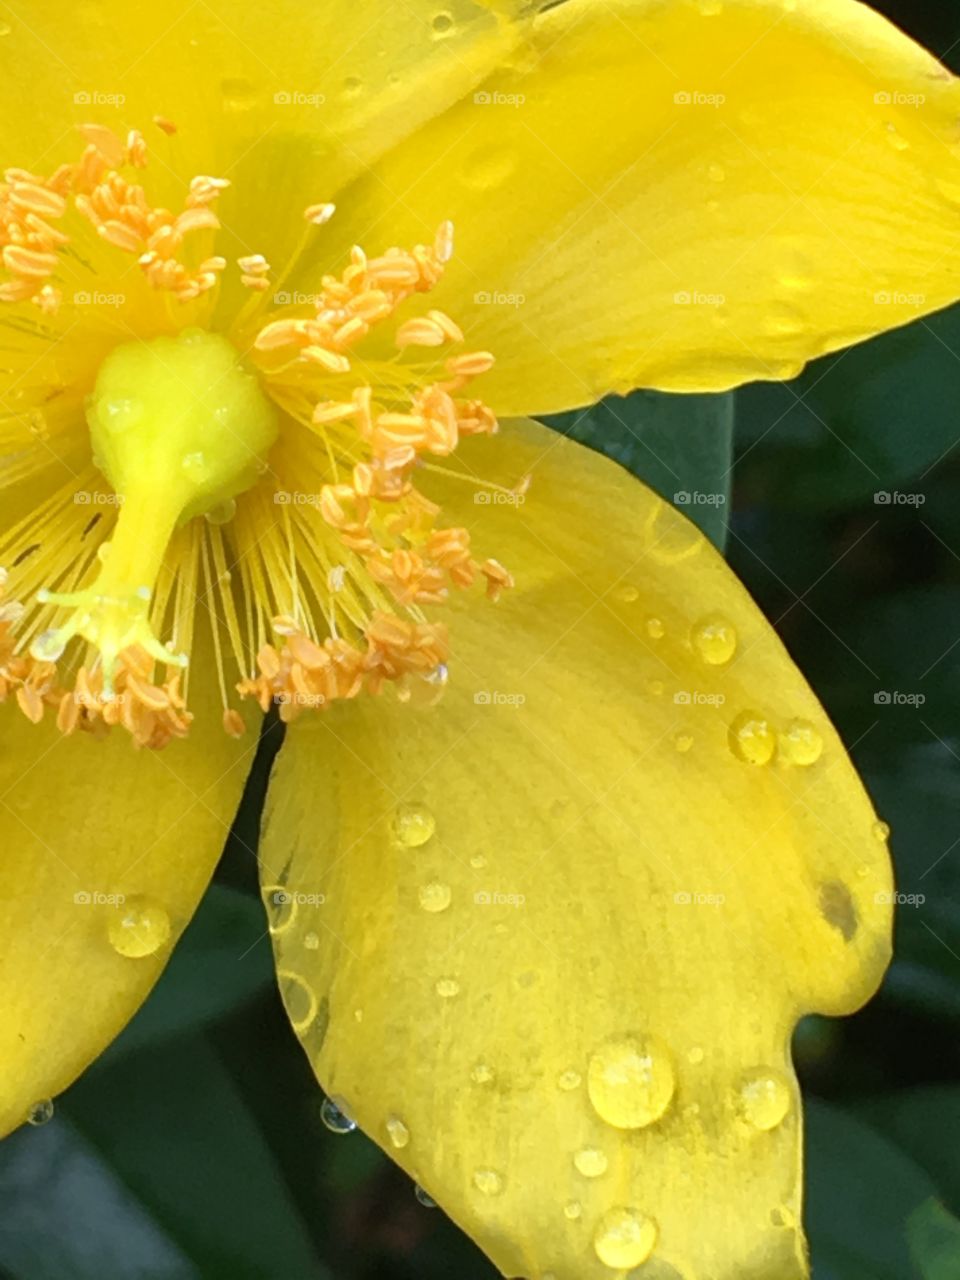 #mycityisbeautiful droplets in yellow petals 